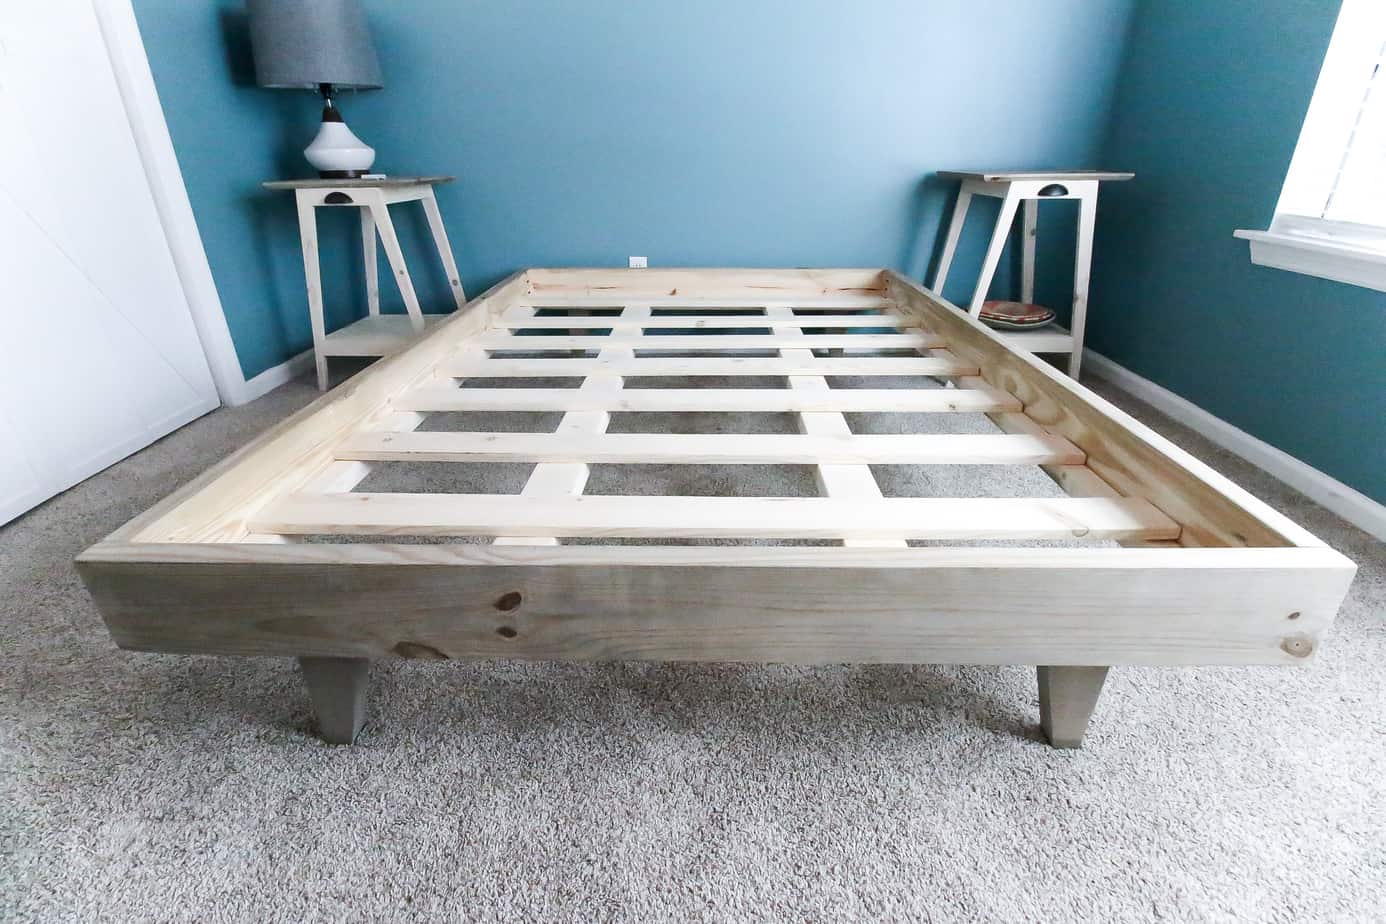 How To Build A Platform Bed For 50, Easy Diy King Bed Frame